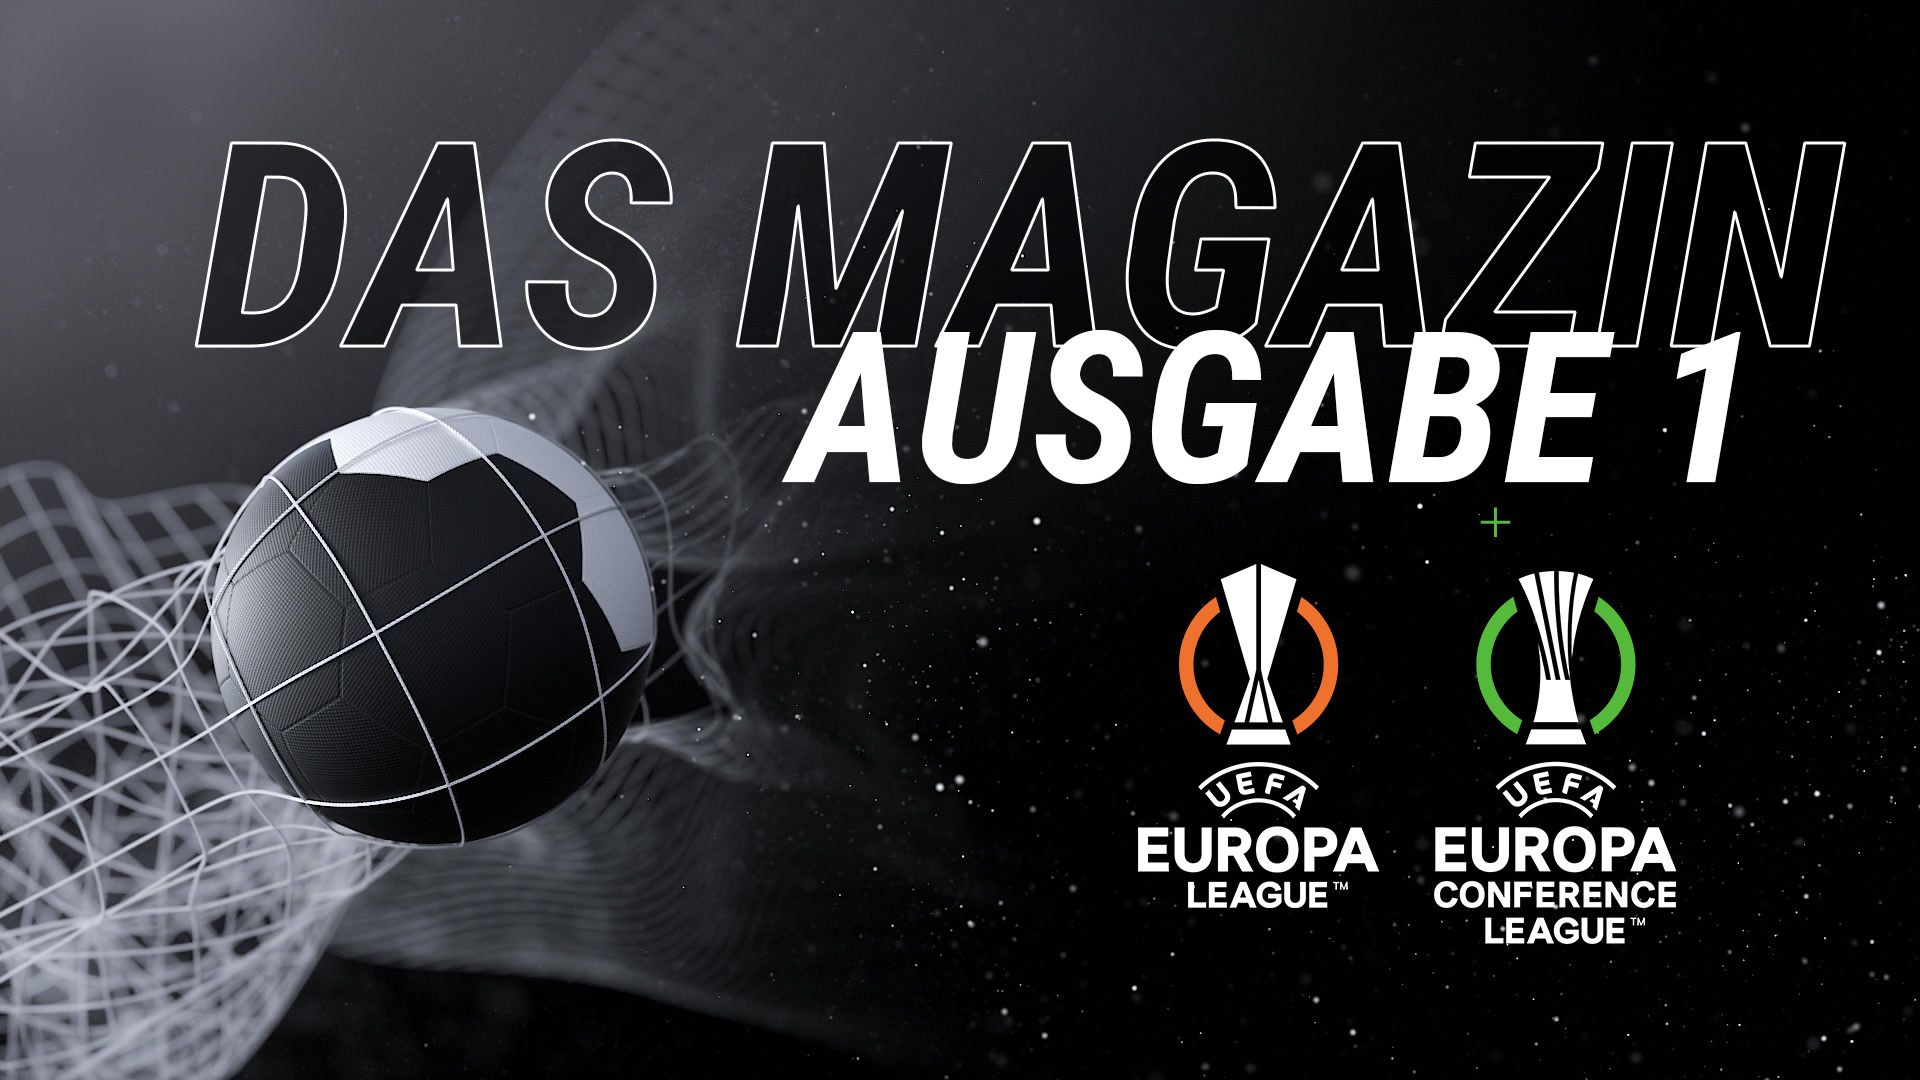 UEFA Europa League / UEFA Europa Conference League Magazin